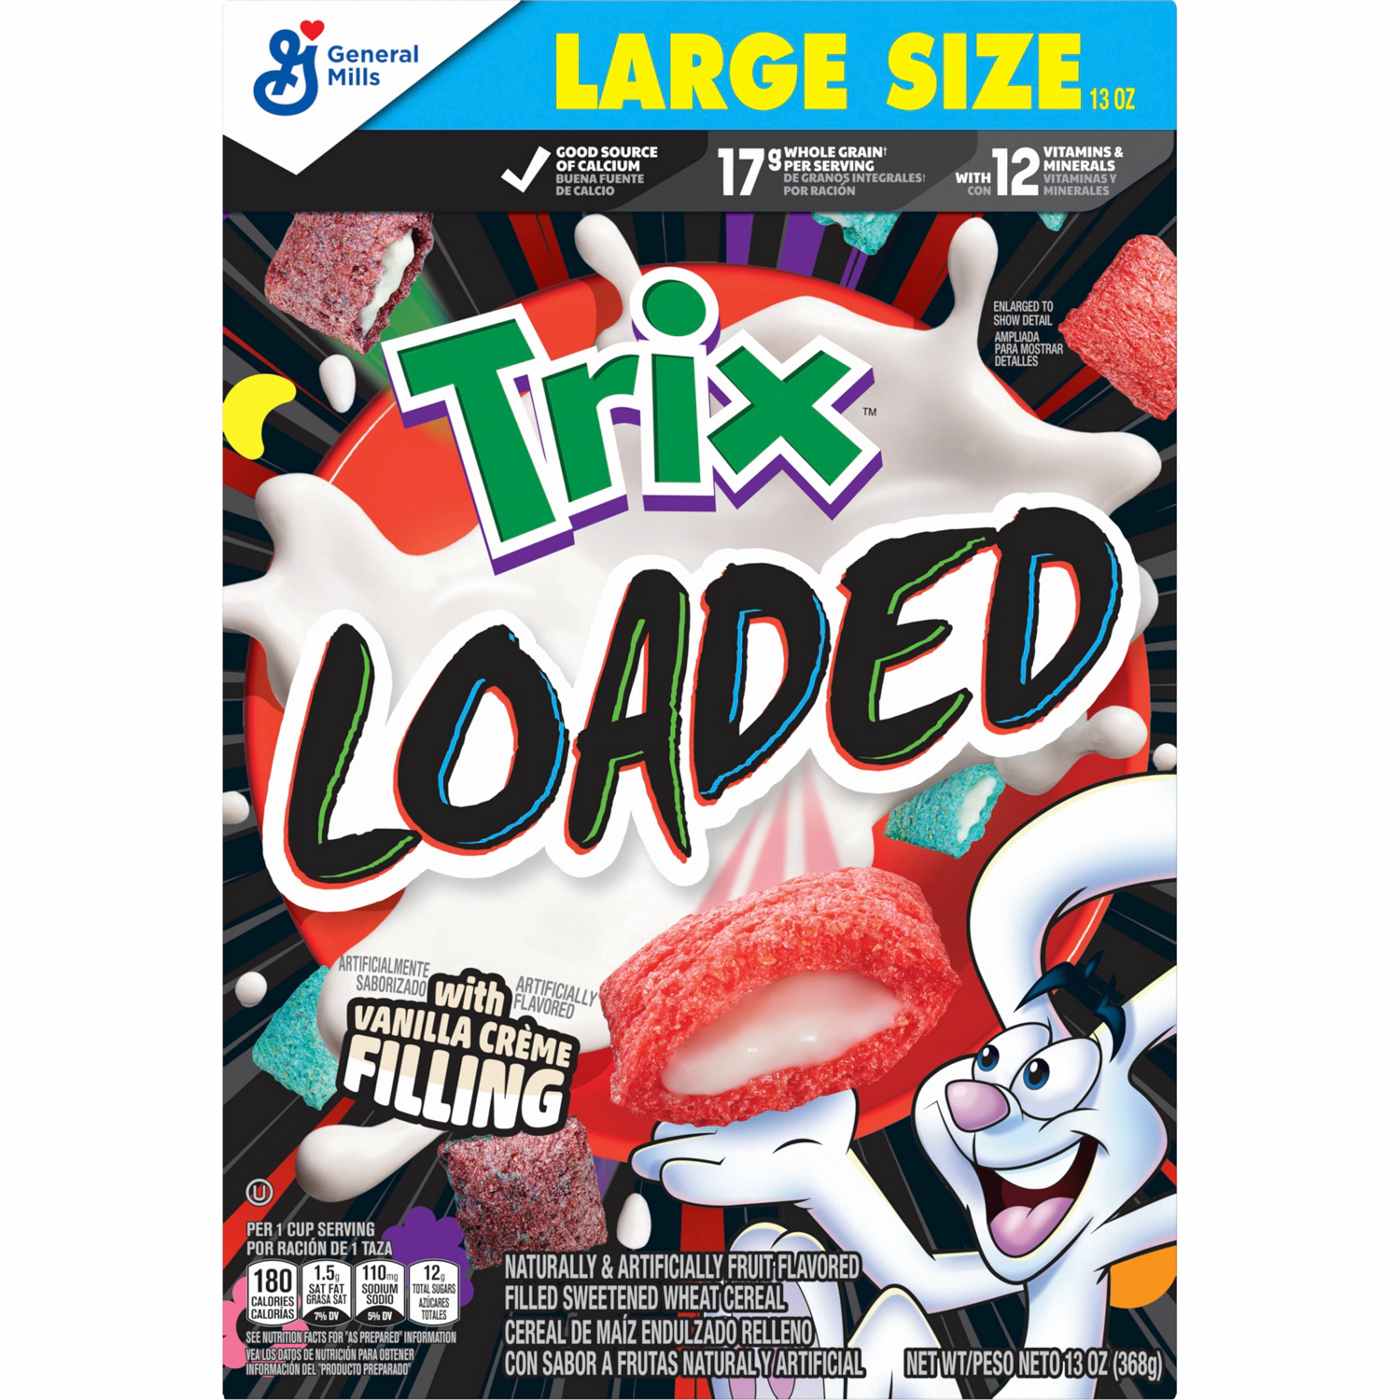 General Mills Loaded Trix Cereal Large Size; image 1 of 3